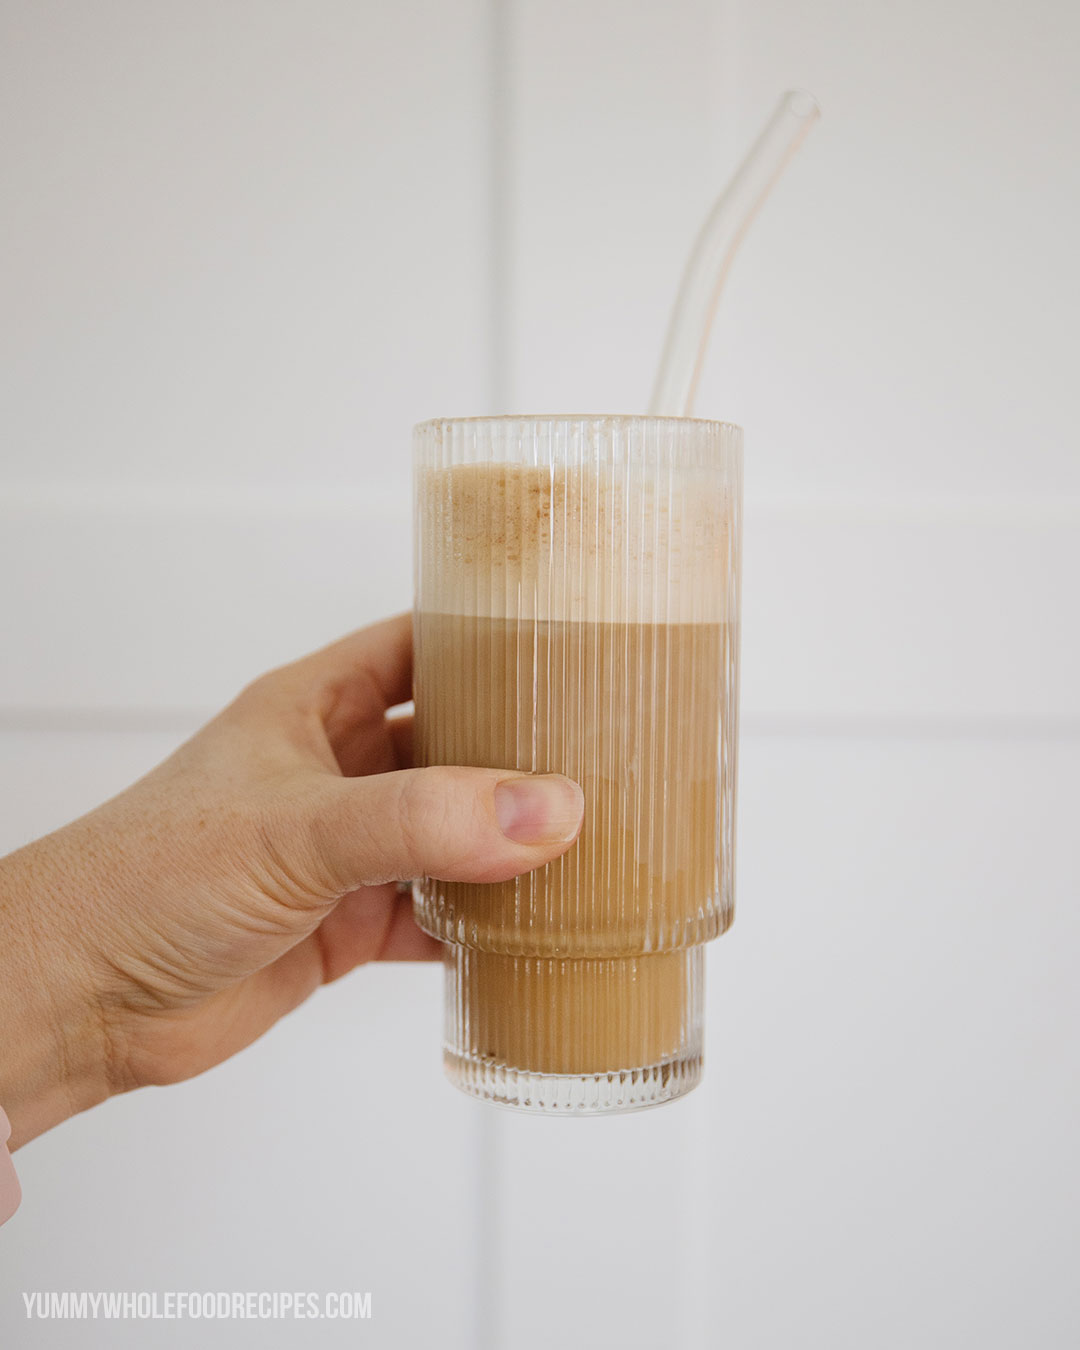 How to Make Iced Coffee with Nespresso - CoffeeHolli.com